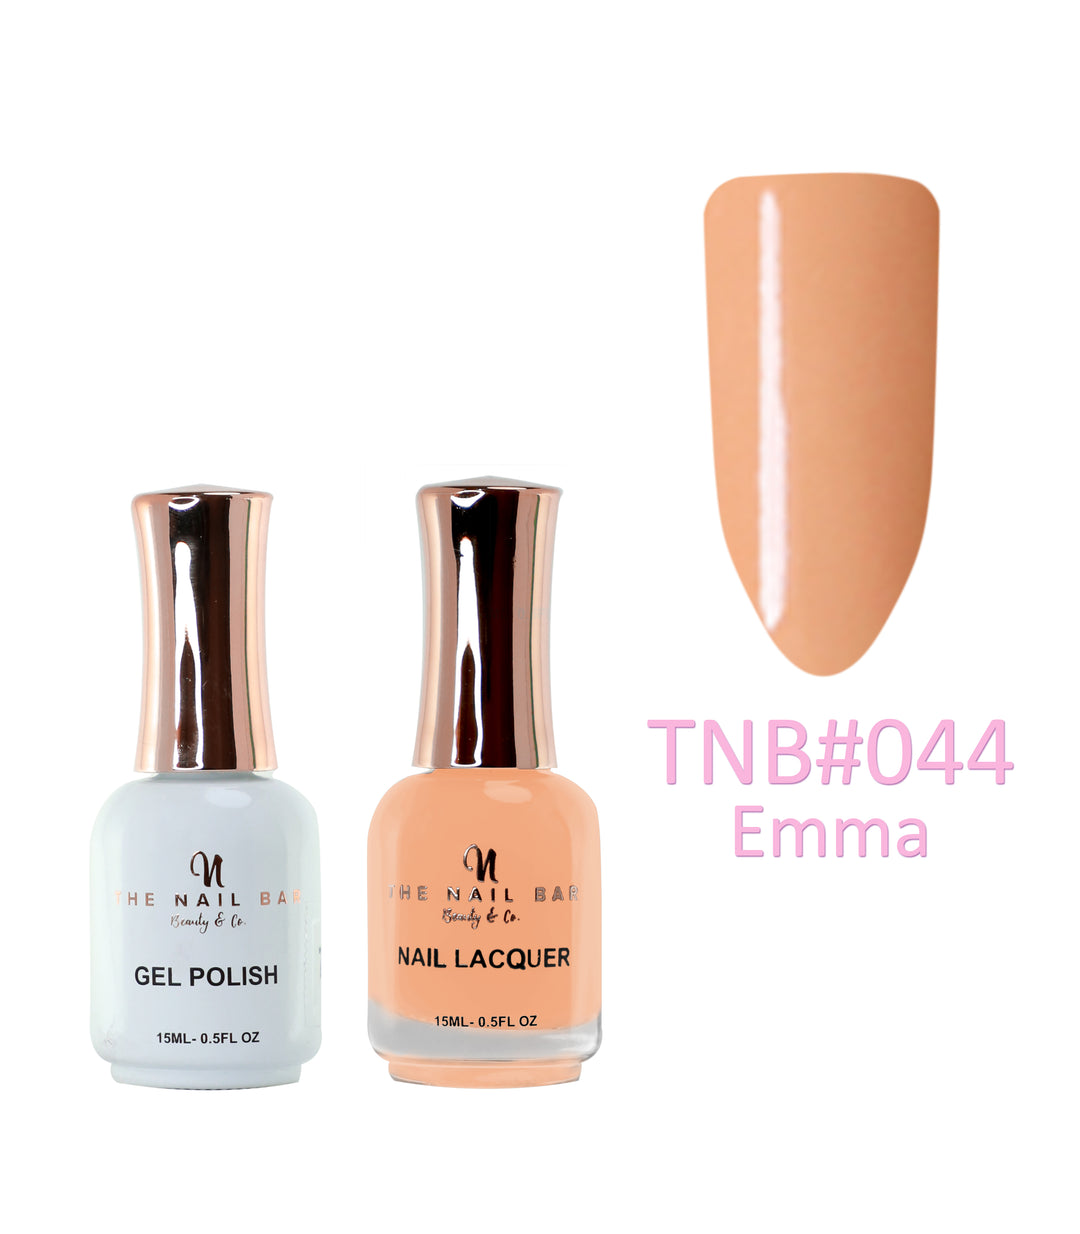 Dual Polish/Gel colour matching (15ml) - emma - The Nail Bar Beauty & Co.